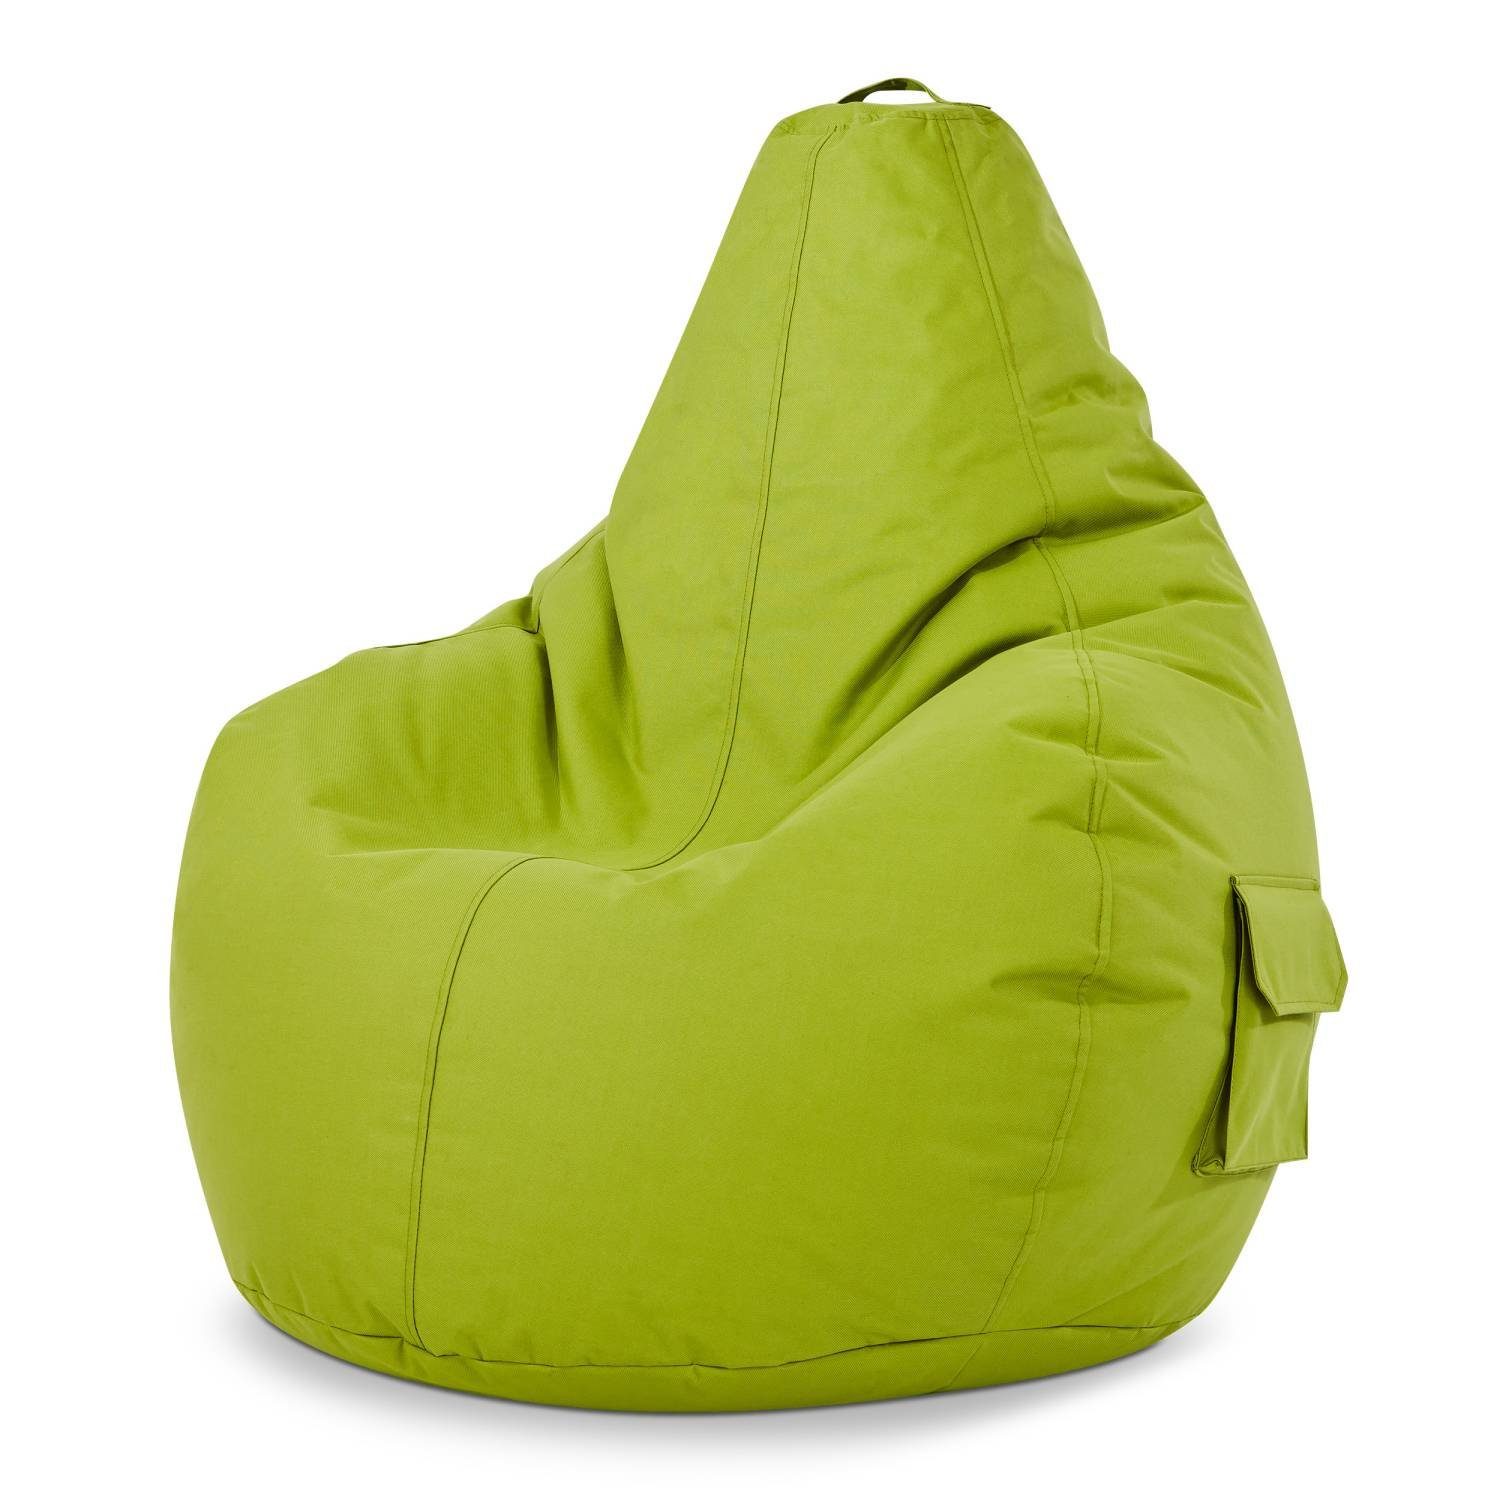 Green Bean Sitzsack Cozy (Sitzsack mit Rückenlehne 80x70x90cm - Gaming Chair mit 230L Füllung, Kuschelig Weich Waschbar), Bean Bag Bodenkissen Lounge Sitzhocker Relax-Sessel Gamer Gamingstuhl Grün